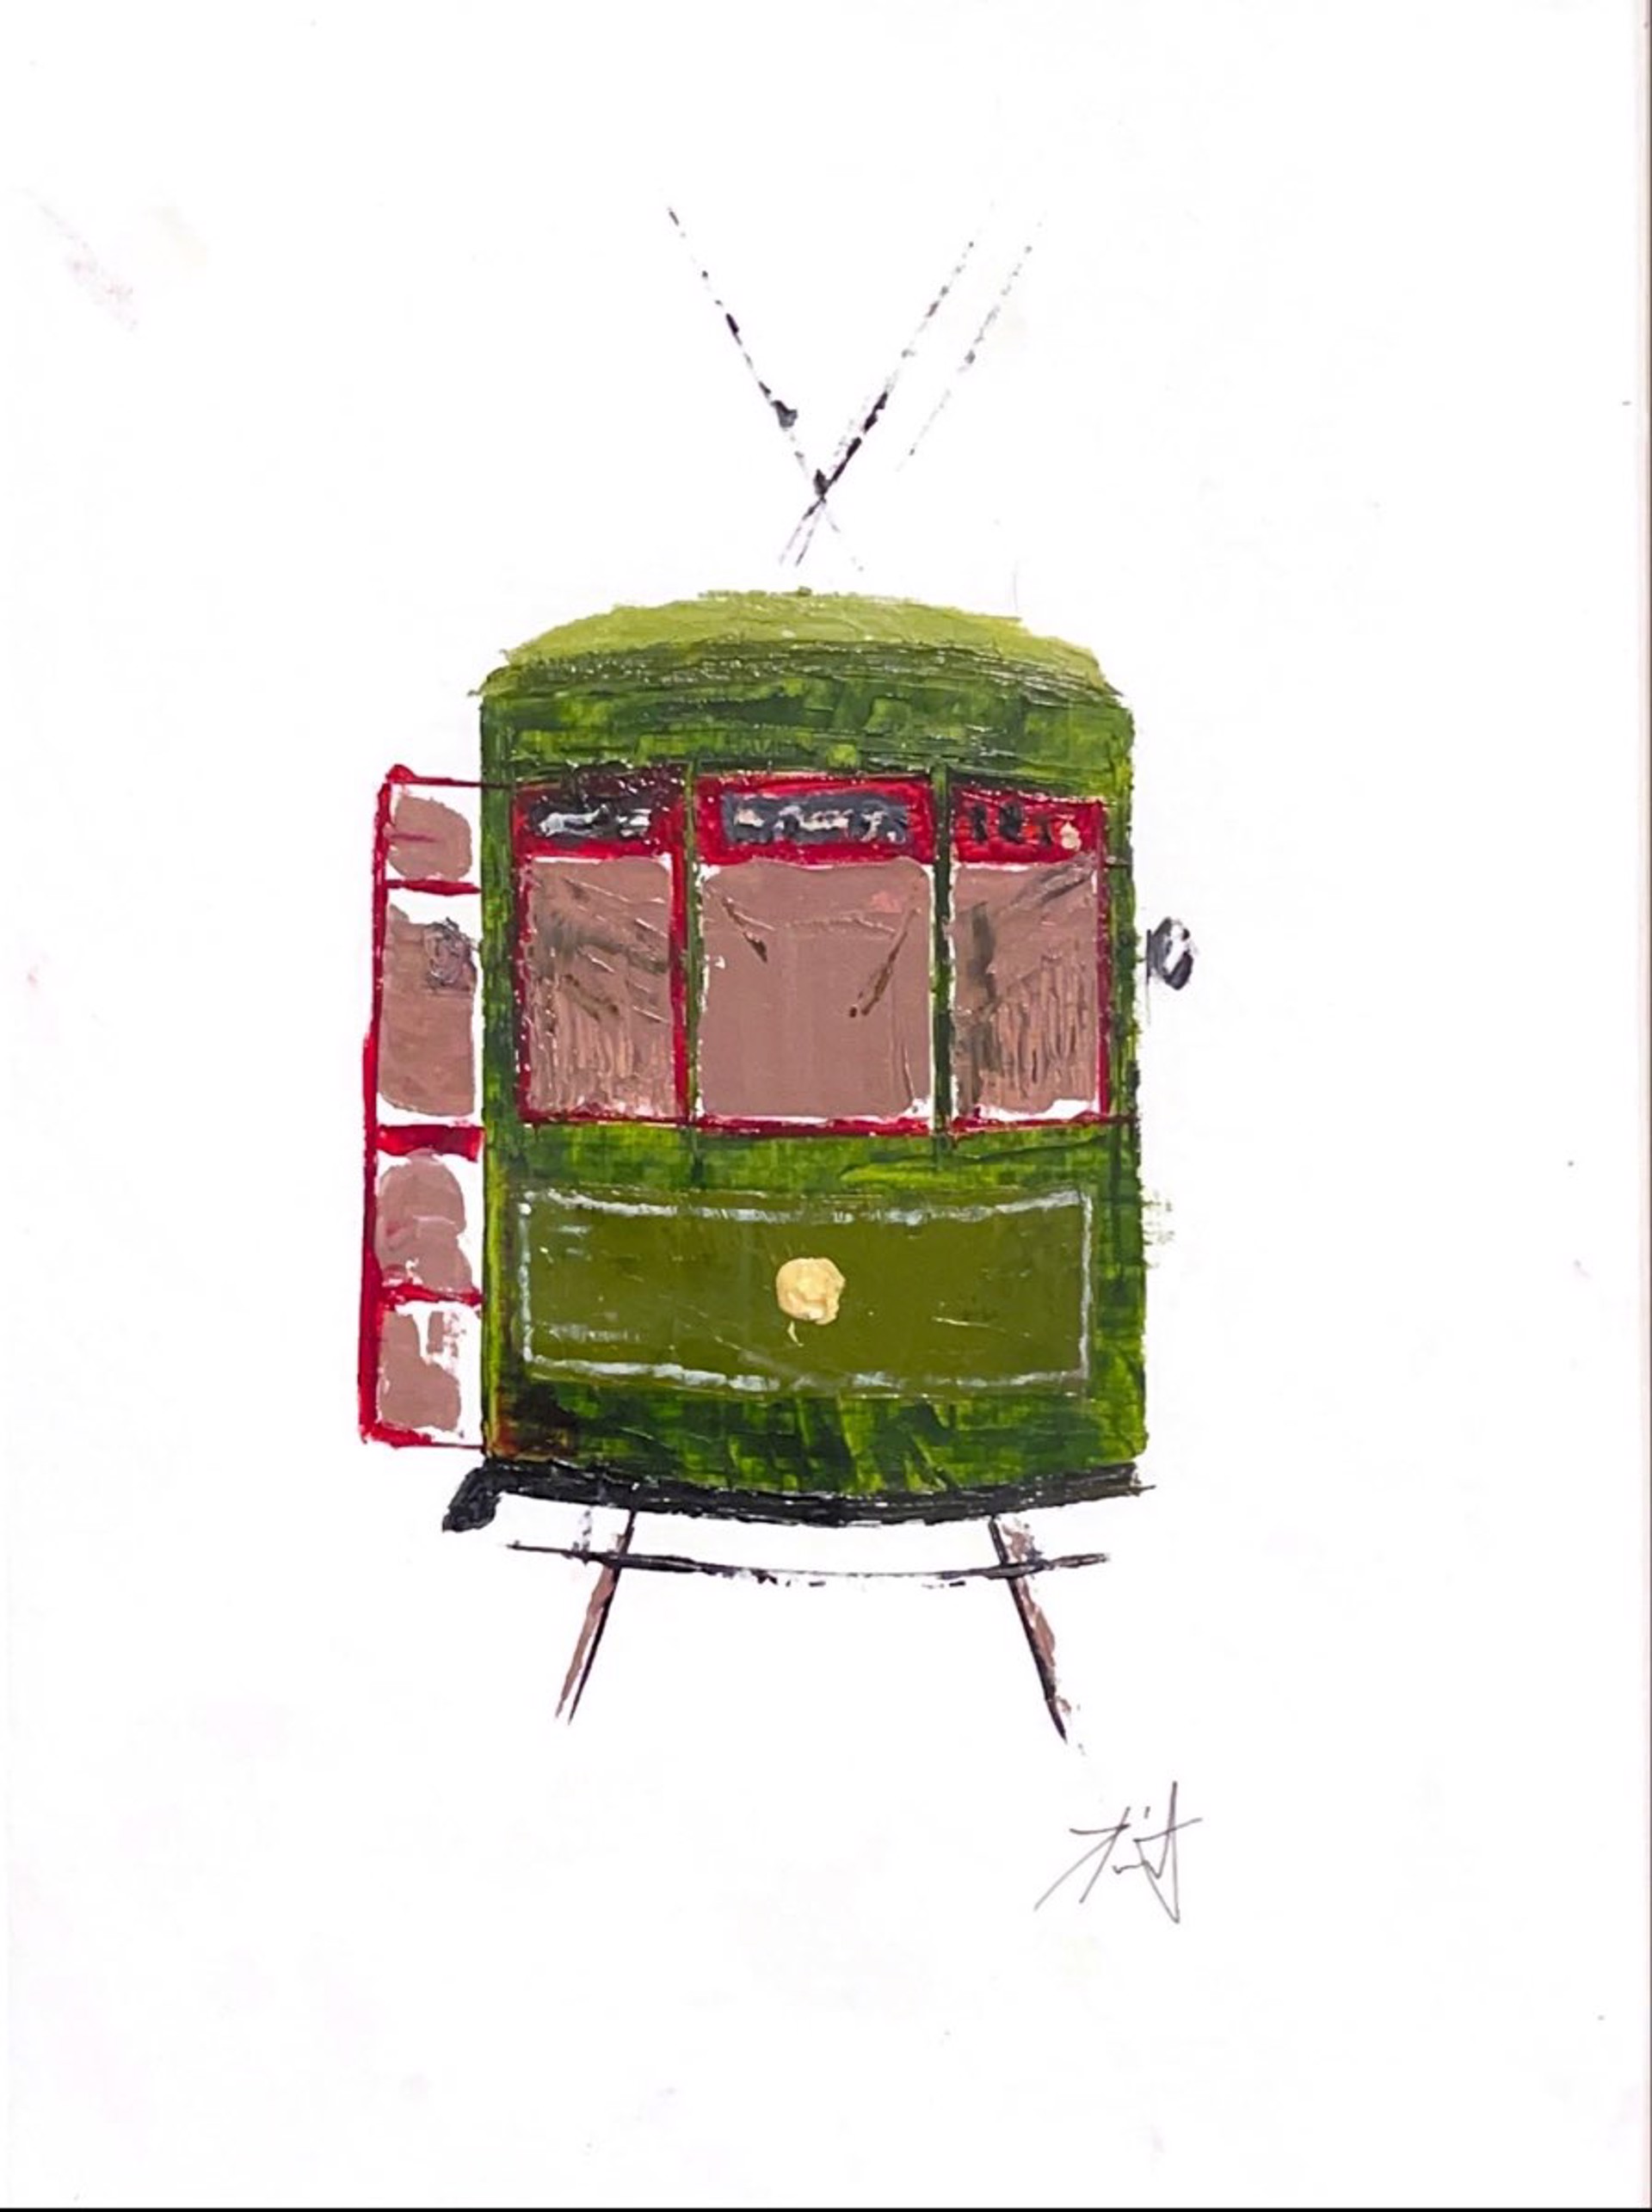 Streetcar (framed) by Knight